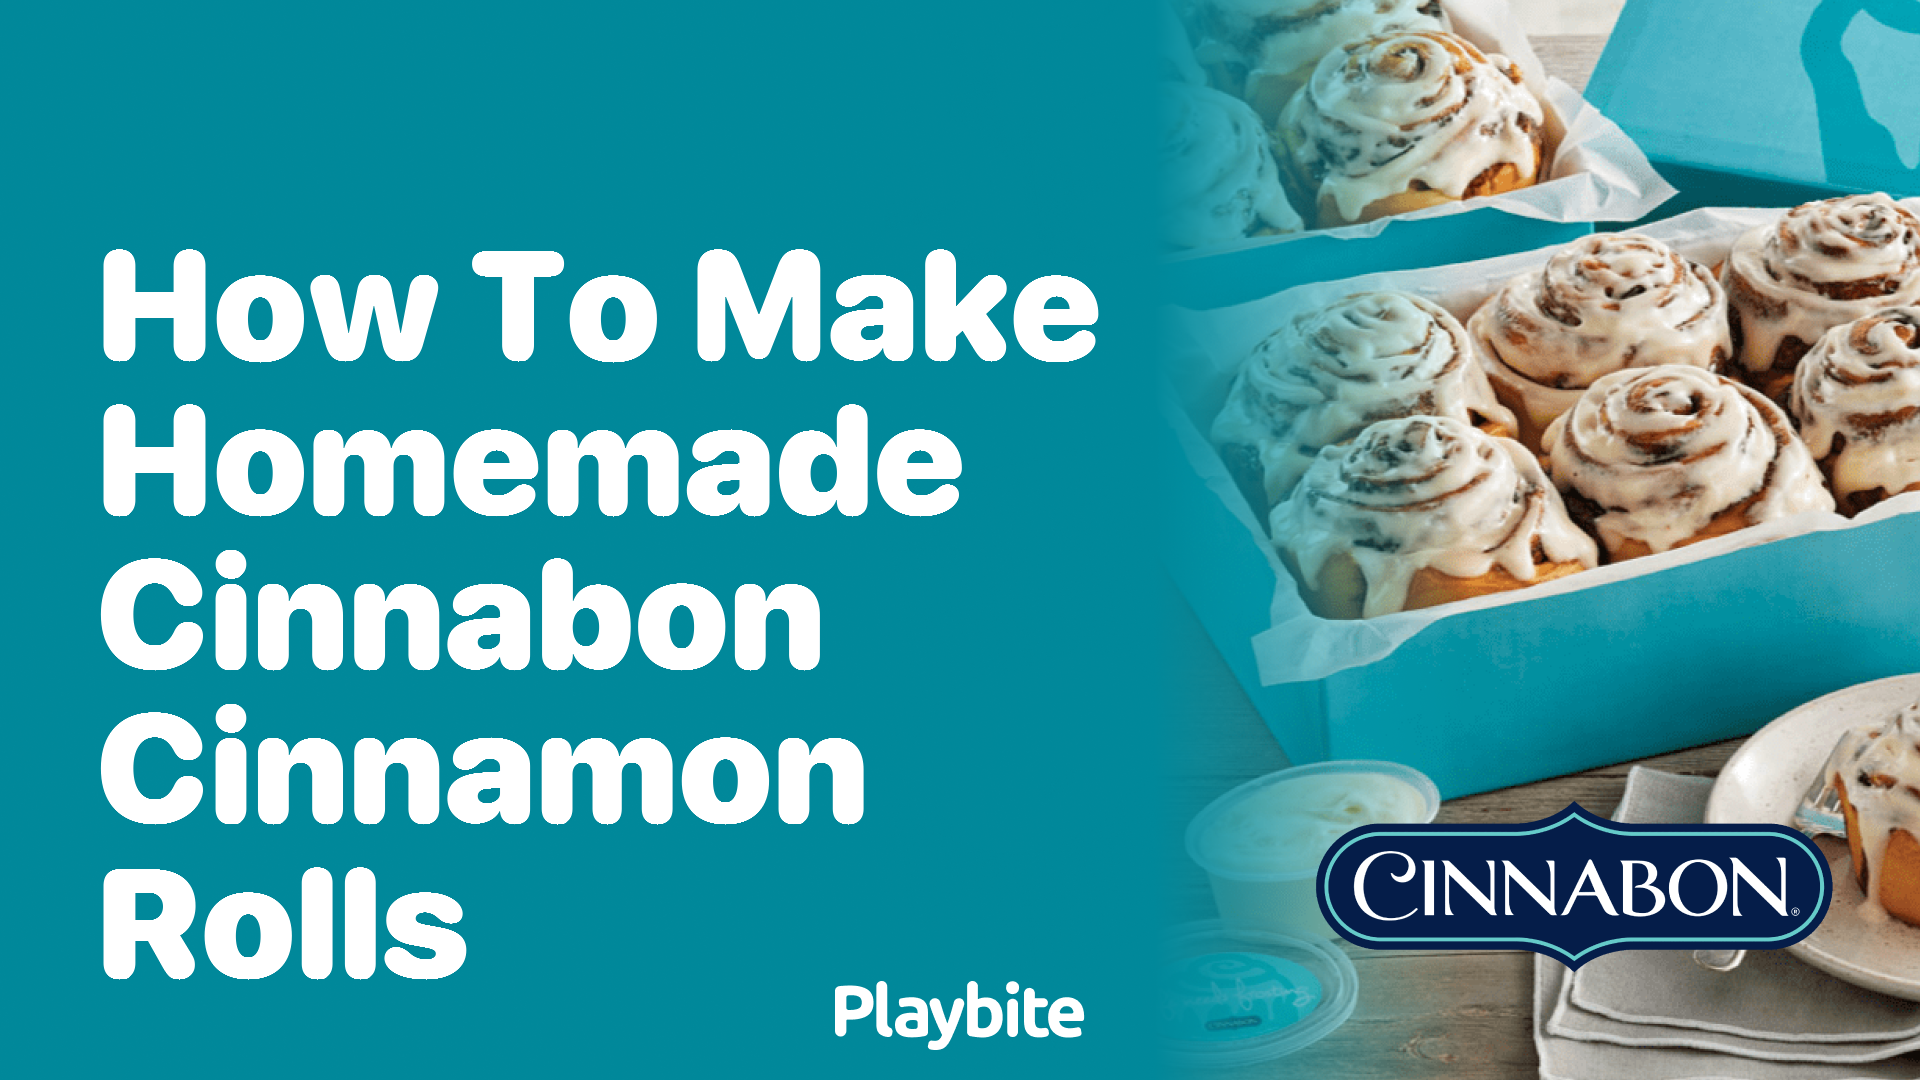 How to Make Homemade Cinnabon Cinnamon Rolls